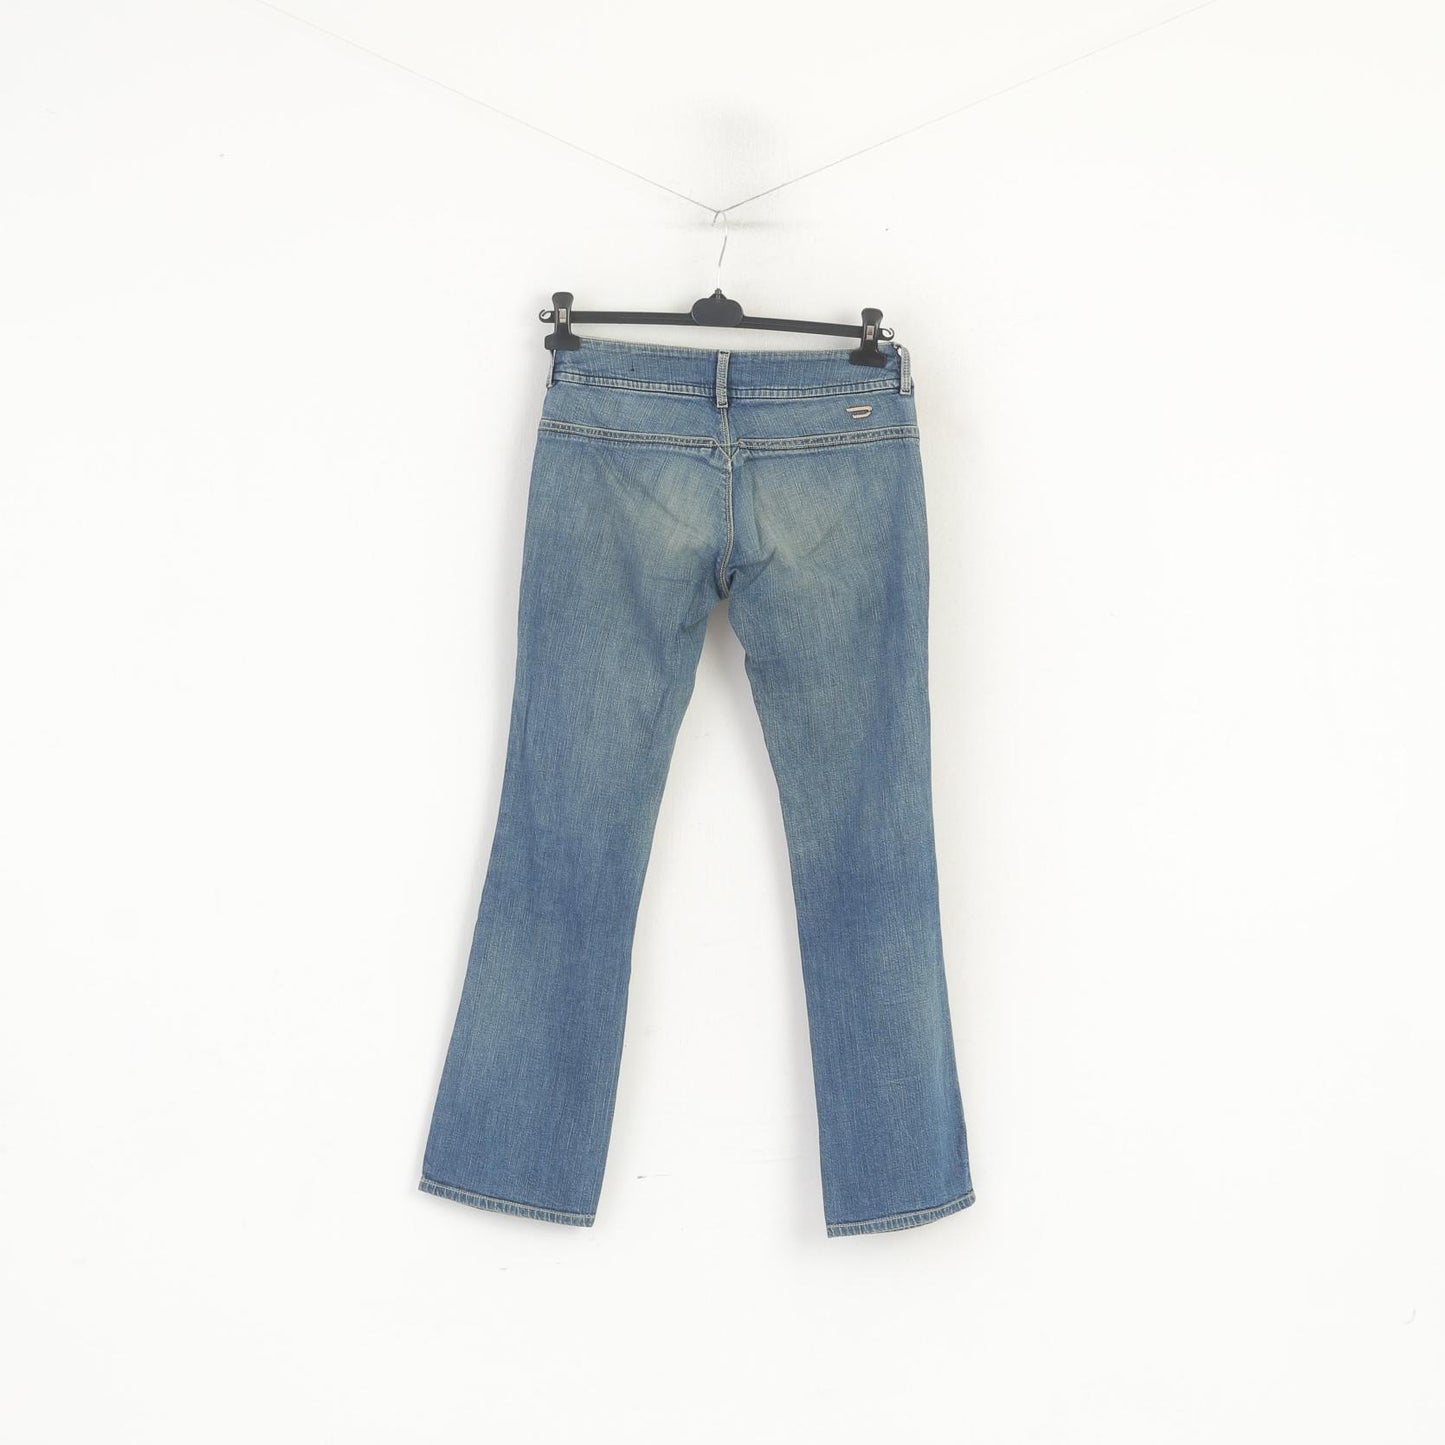 Diesel Industry Women 30 Jeans Trousers Navy Denim Cotton Bootcut Low Waist Pants